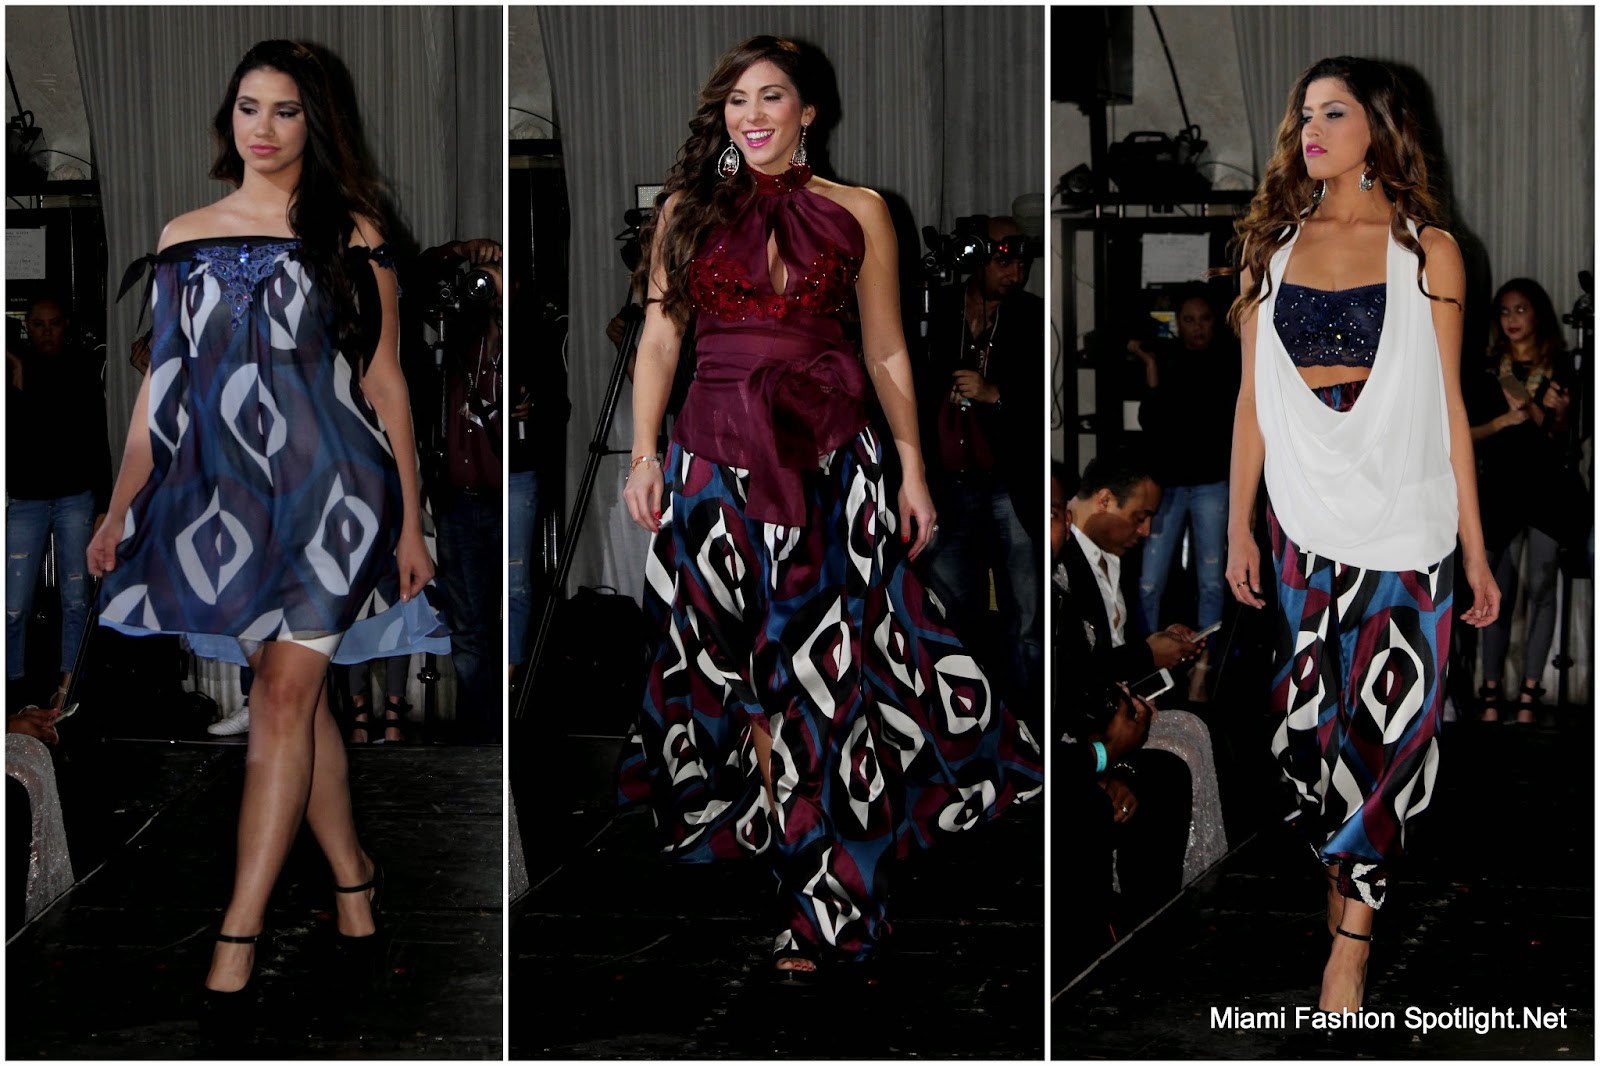 Latino Fashion Week celebrated ninth annual “Timeless” tour in Miami